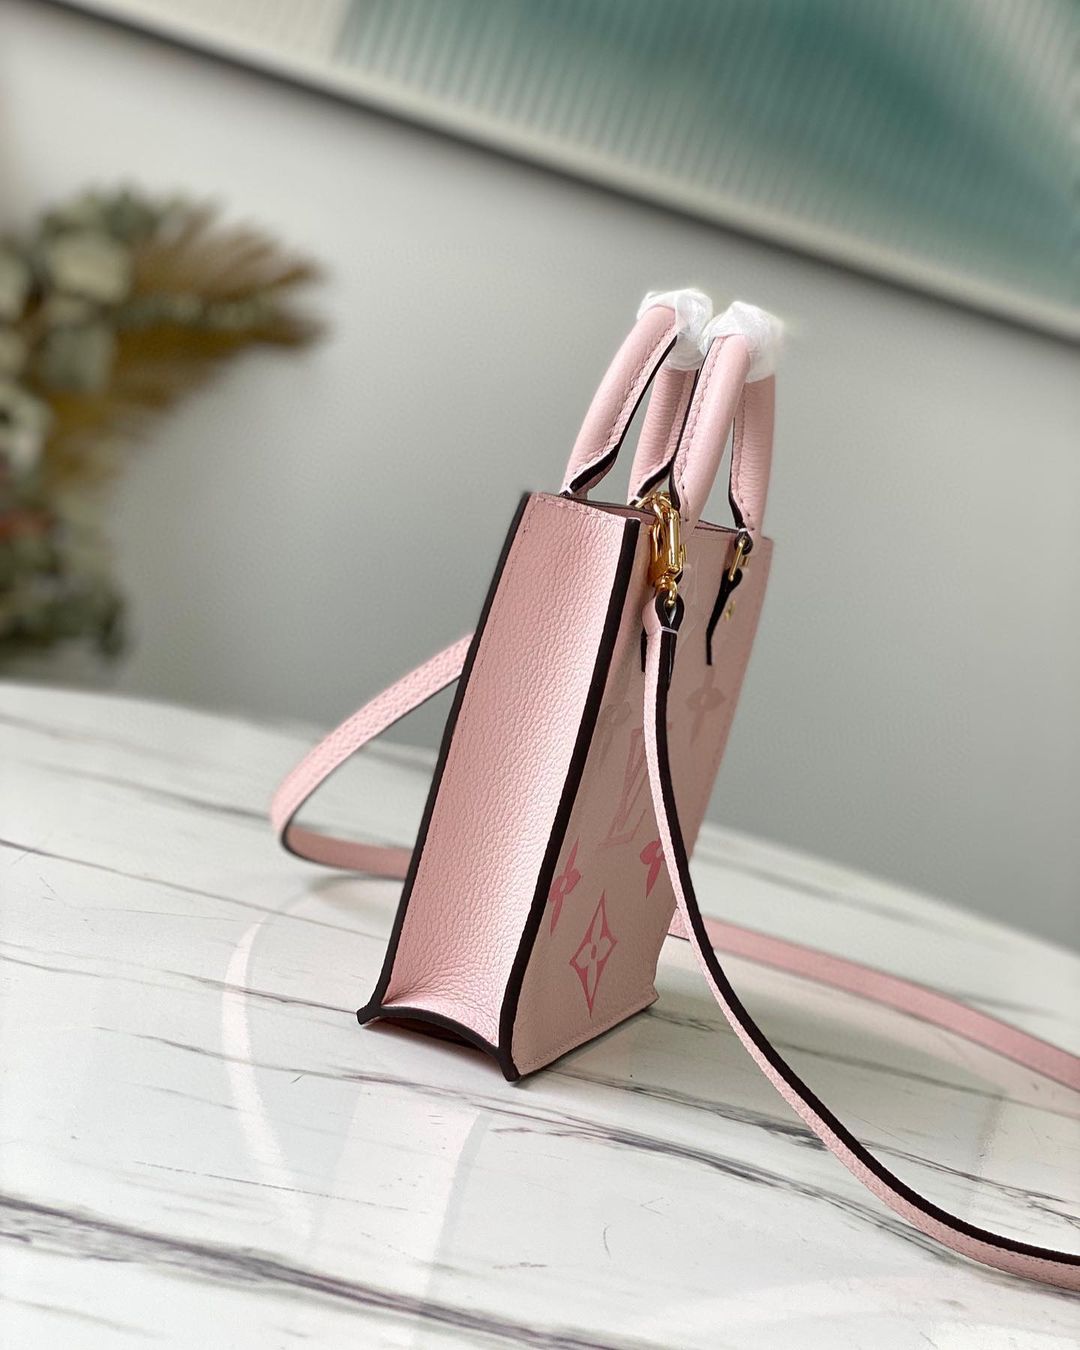 LV Petit Sac Plat Miniature Replica Bag, Pink